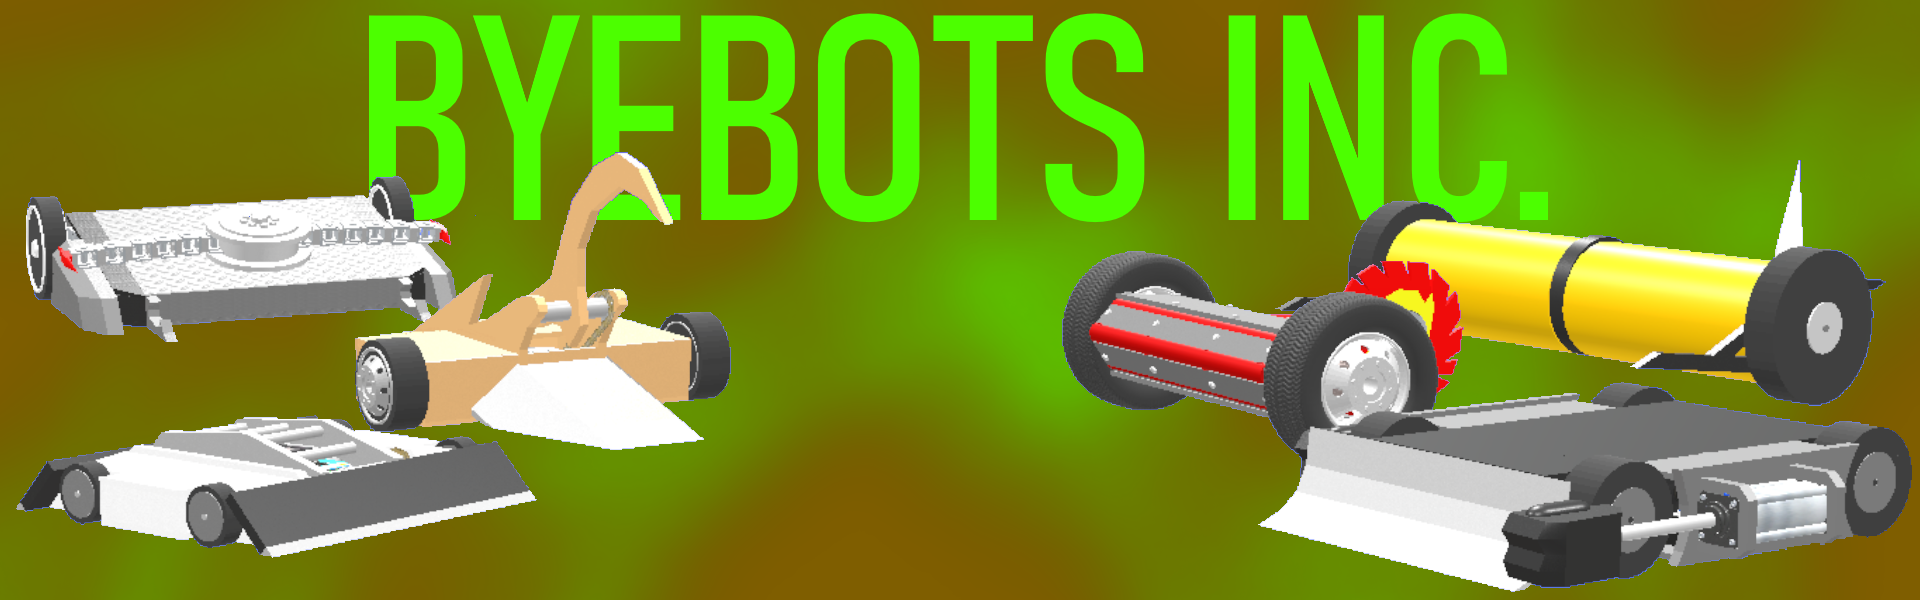 Byebots Inc.png